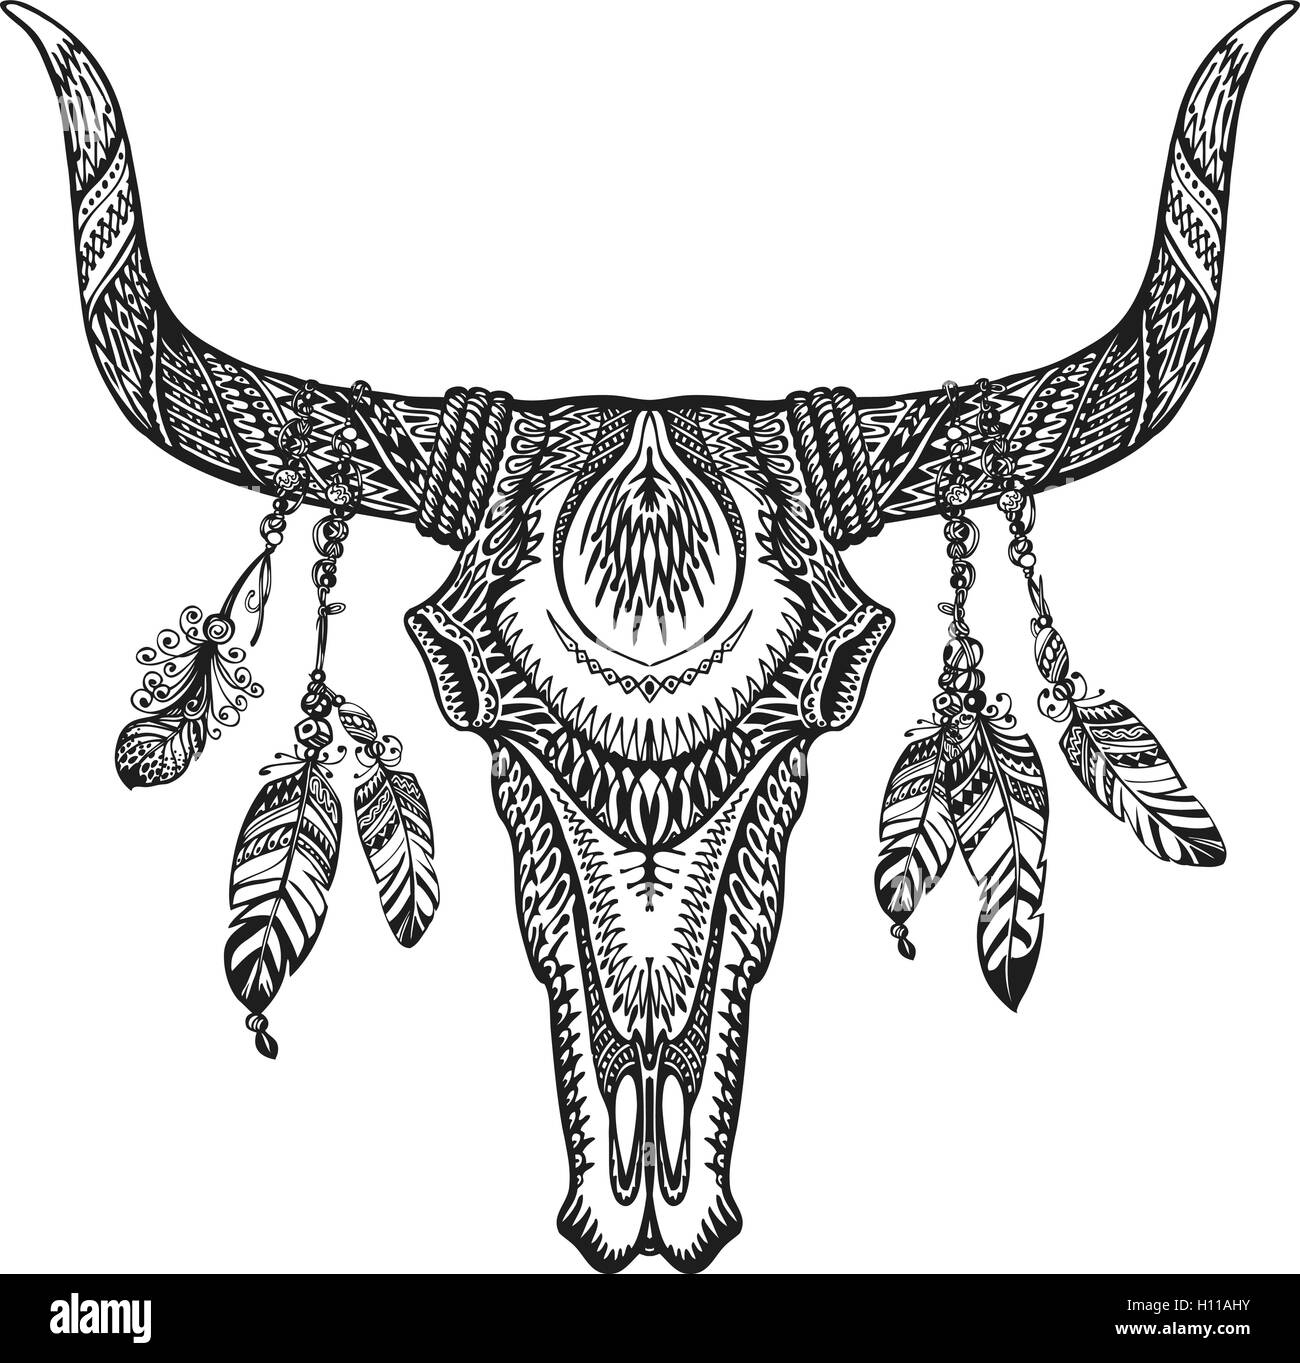 Bull-Totenkopf mit Federn. Handgezeichnete Skizze indianische totem Stock Vektor